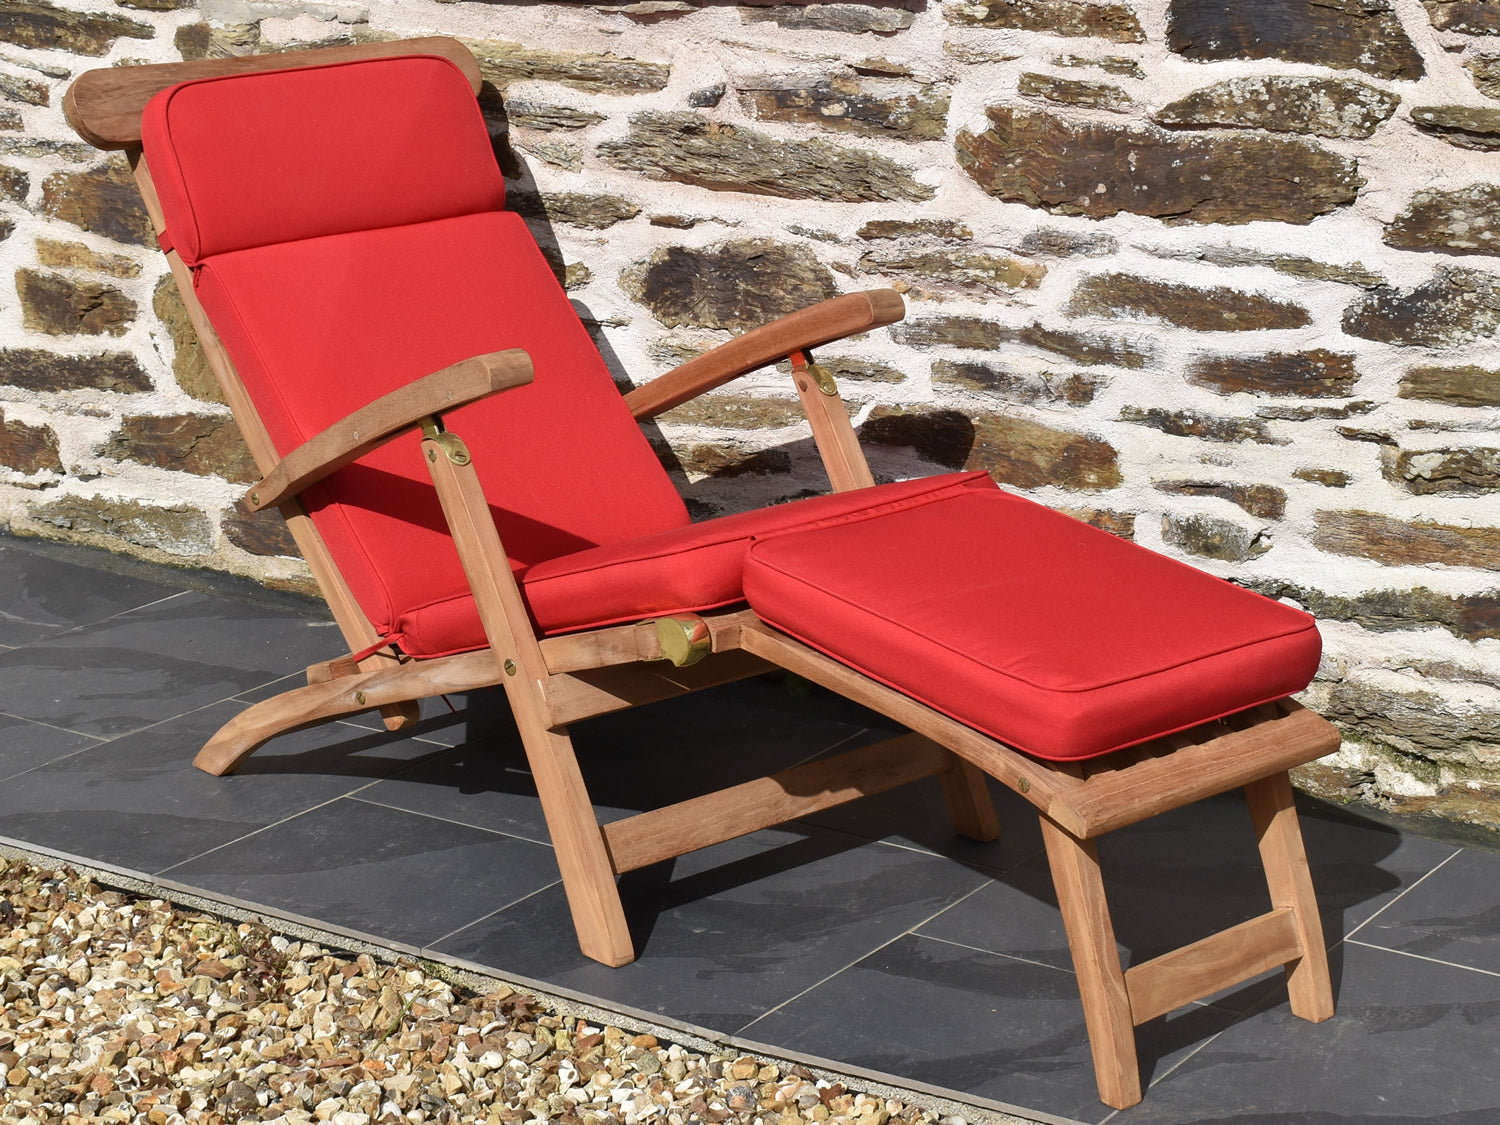 Classic garden steamer chair cushion in bright red